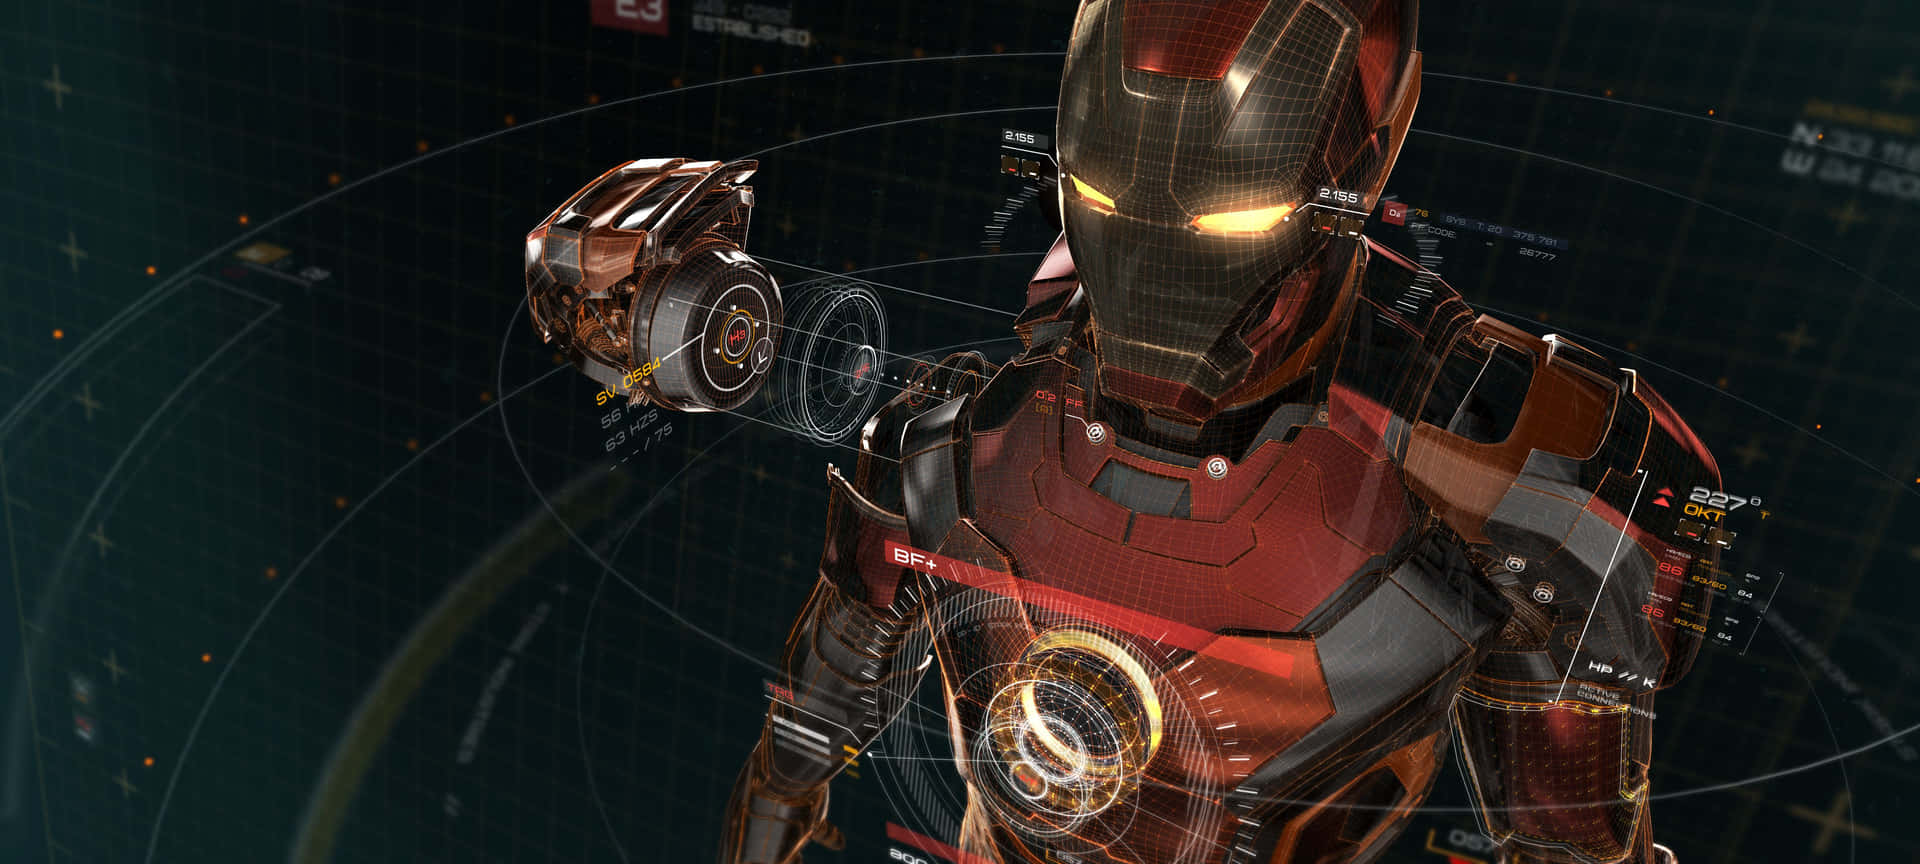 Iron Man Holographic Interface Analysis